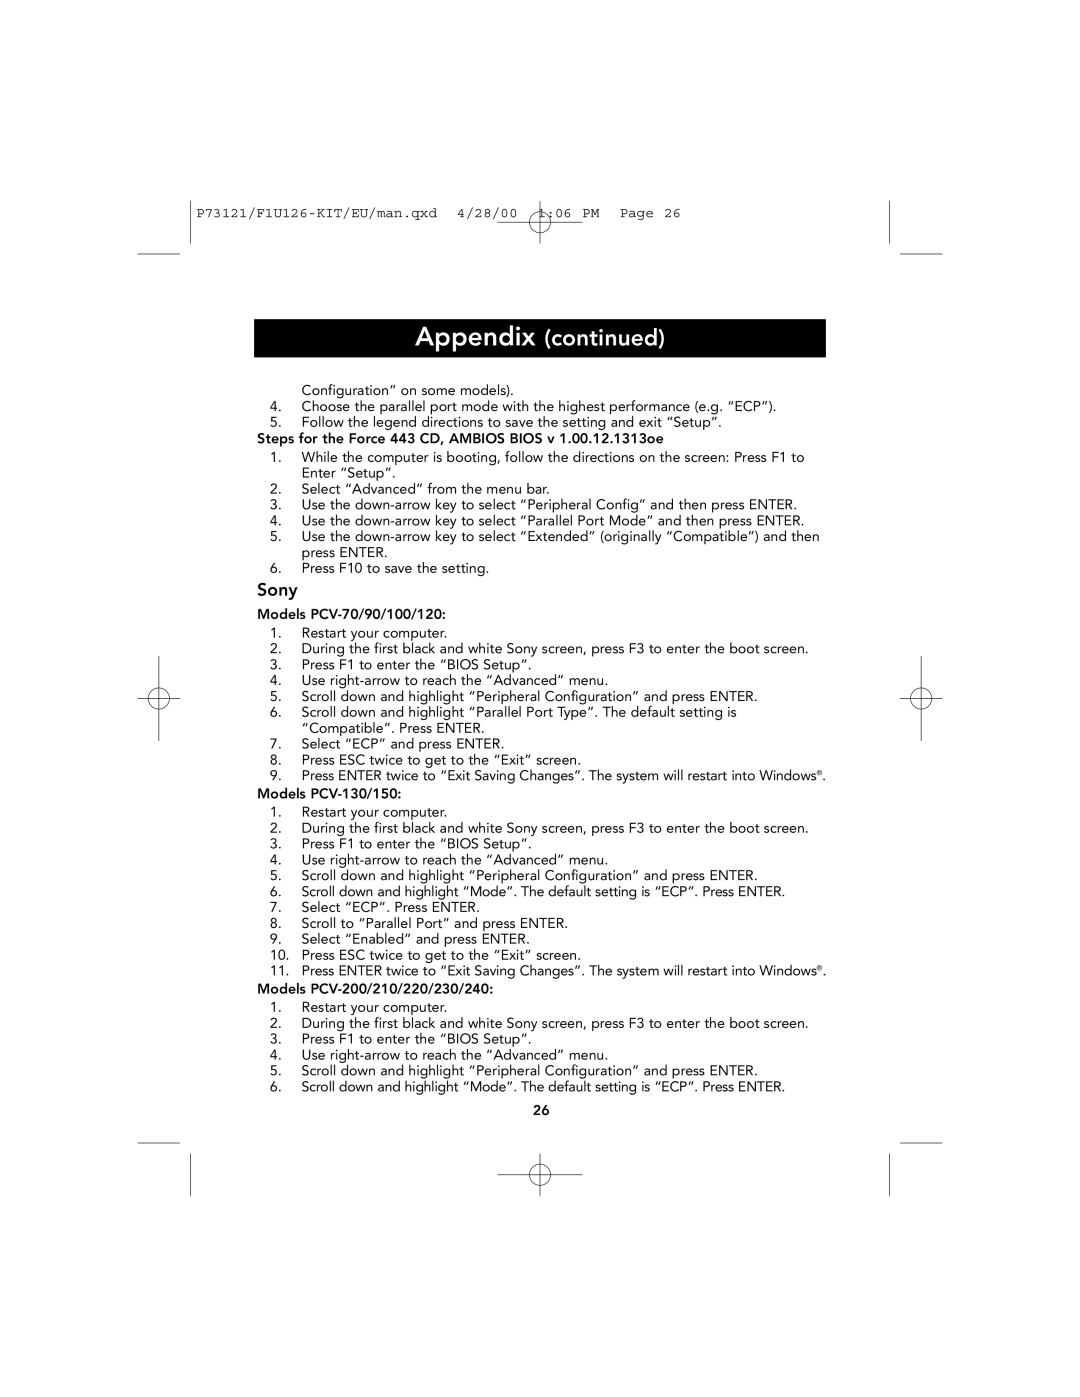 Belkin P73121, F1U126-KIT user manual Appendix continued, Sony 